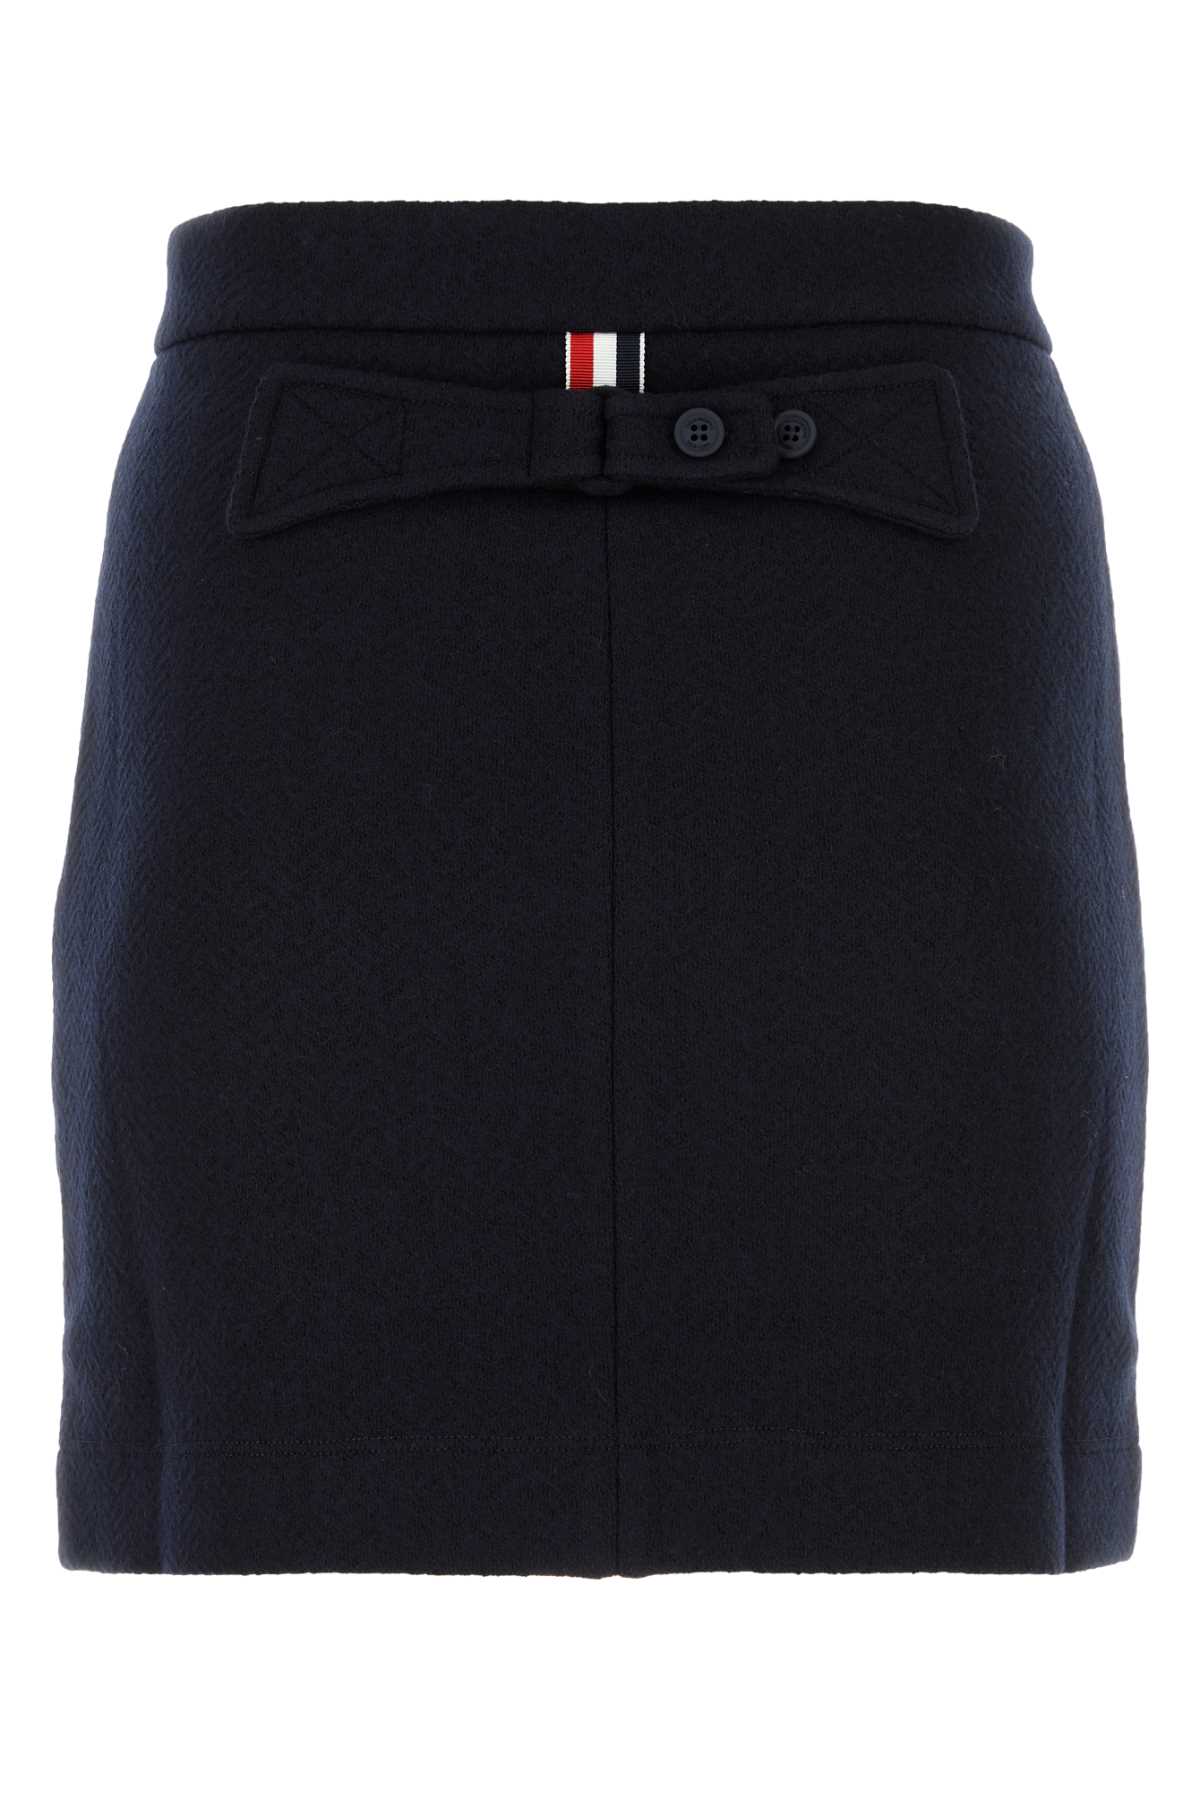 Shop Thom Browne Navy Blue Cotton Blend Mini Skirt